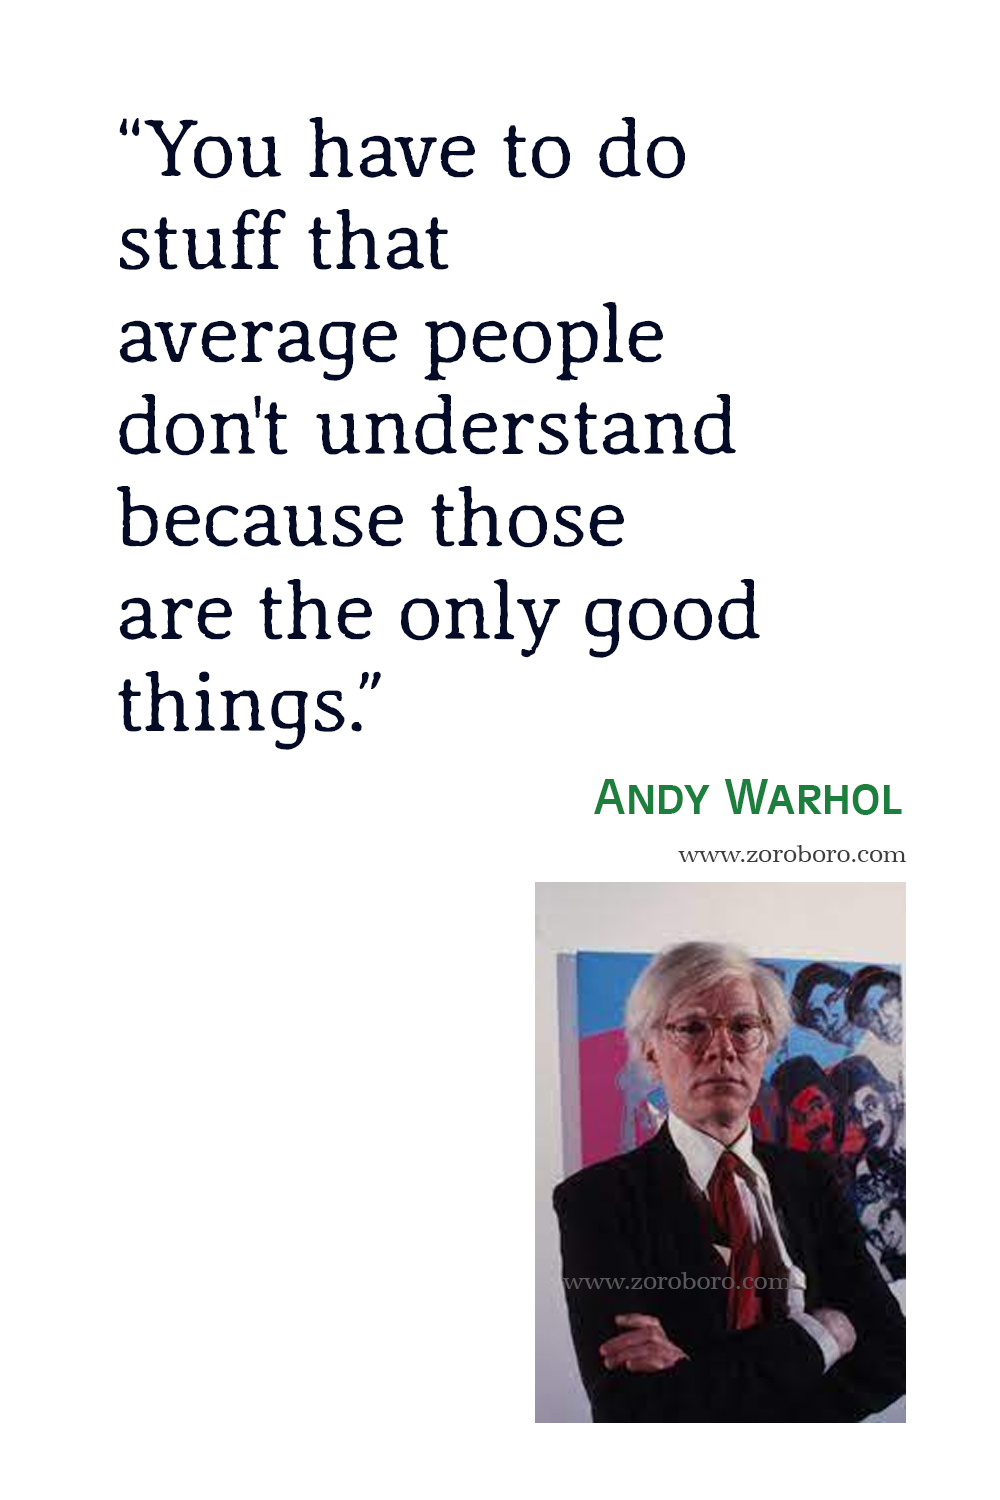 Andy Warhol Quotes, Andy Warhol Art, Love, Paintings, Andy Warhol Books, Movies Quotes, Andy Warhol American visual artist, Pop Art Legend or Fashion Guru